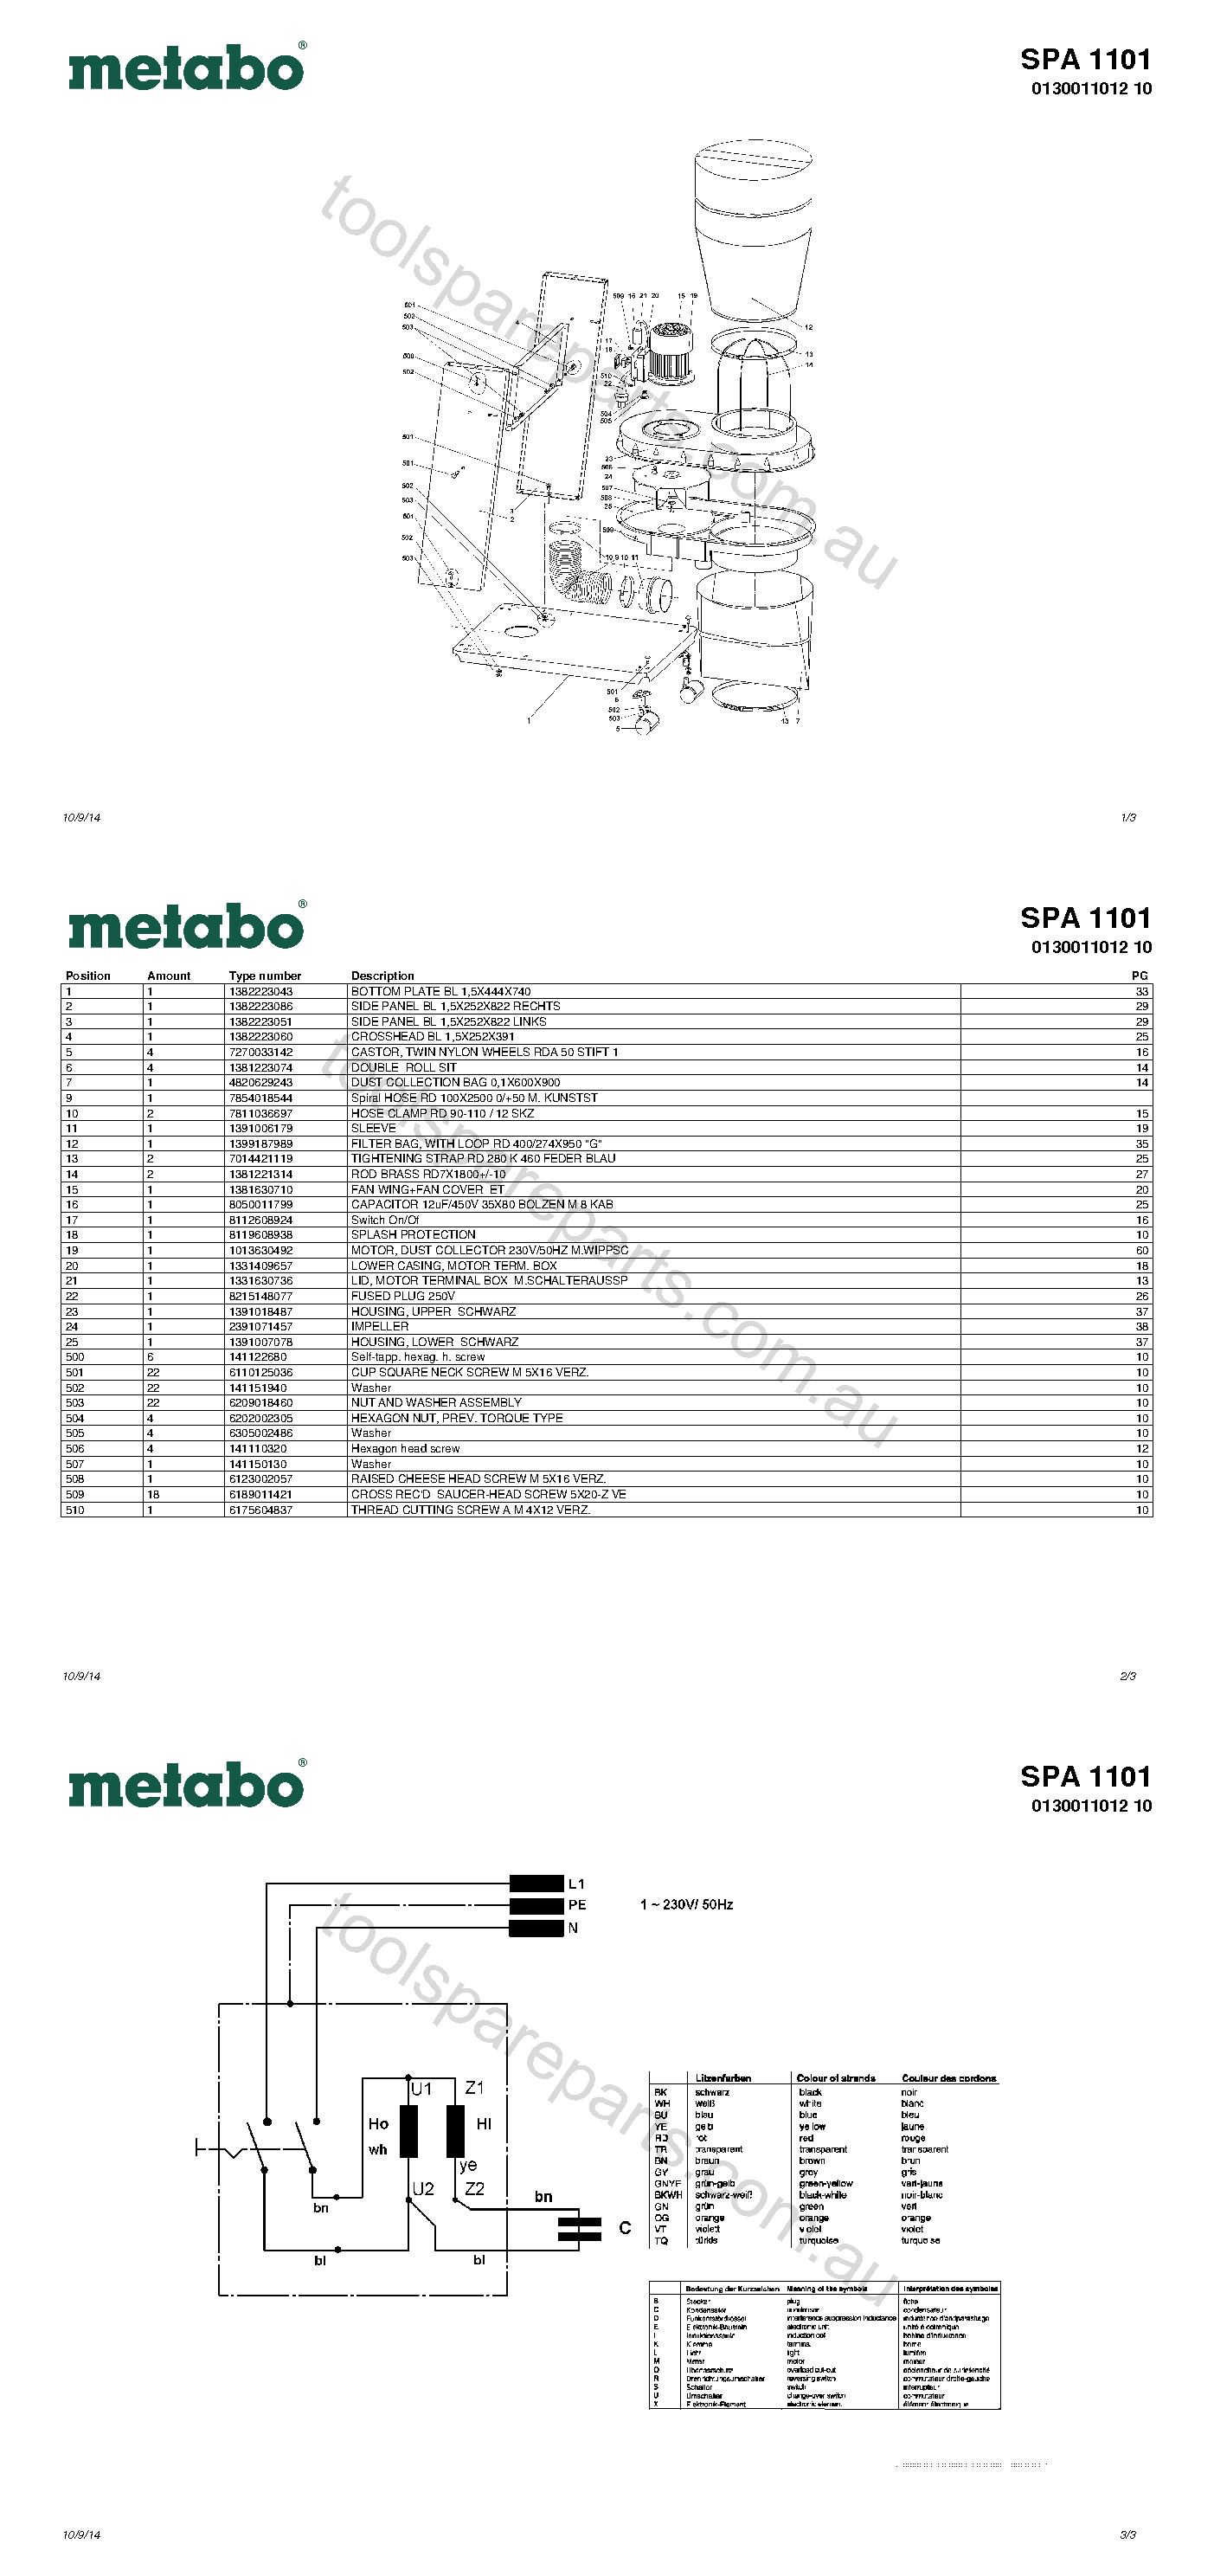 Metabo SPA 1101 0130011012 10  Diagram 1